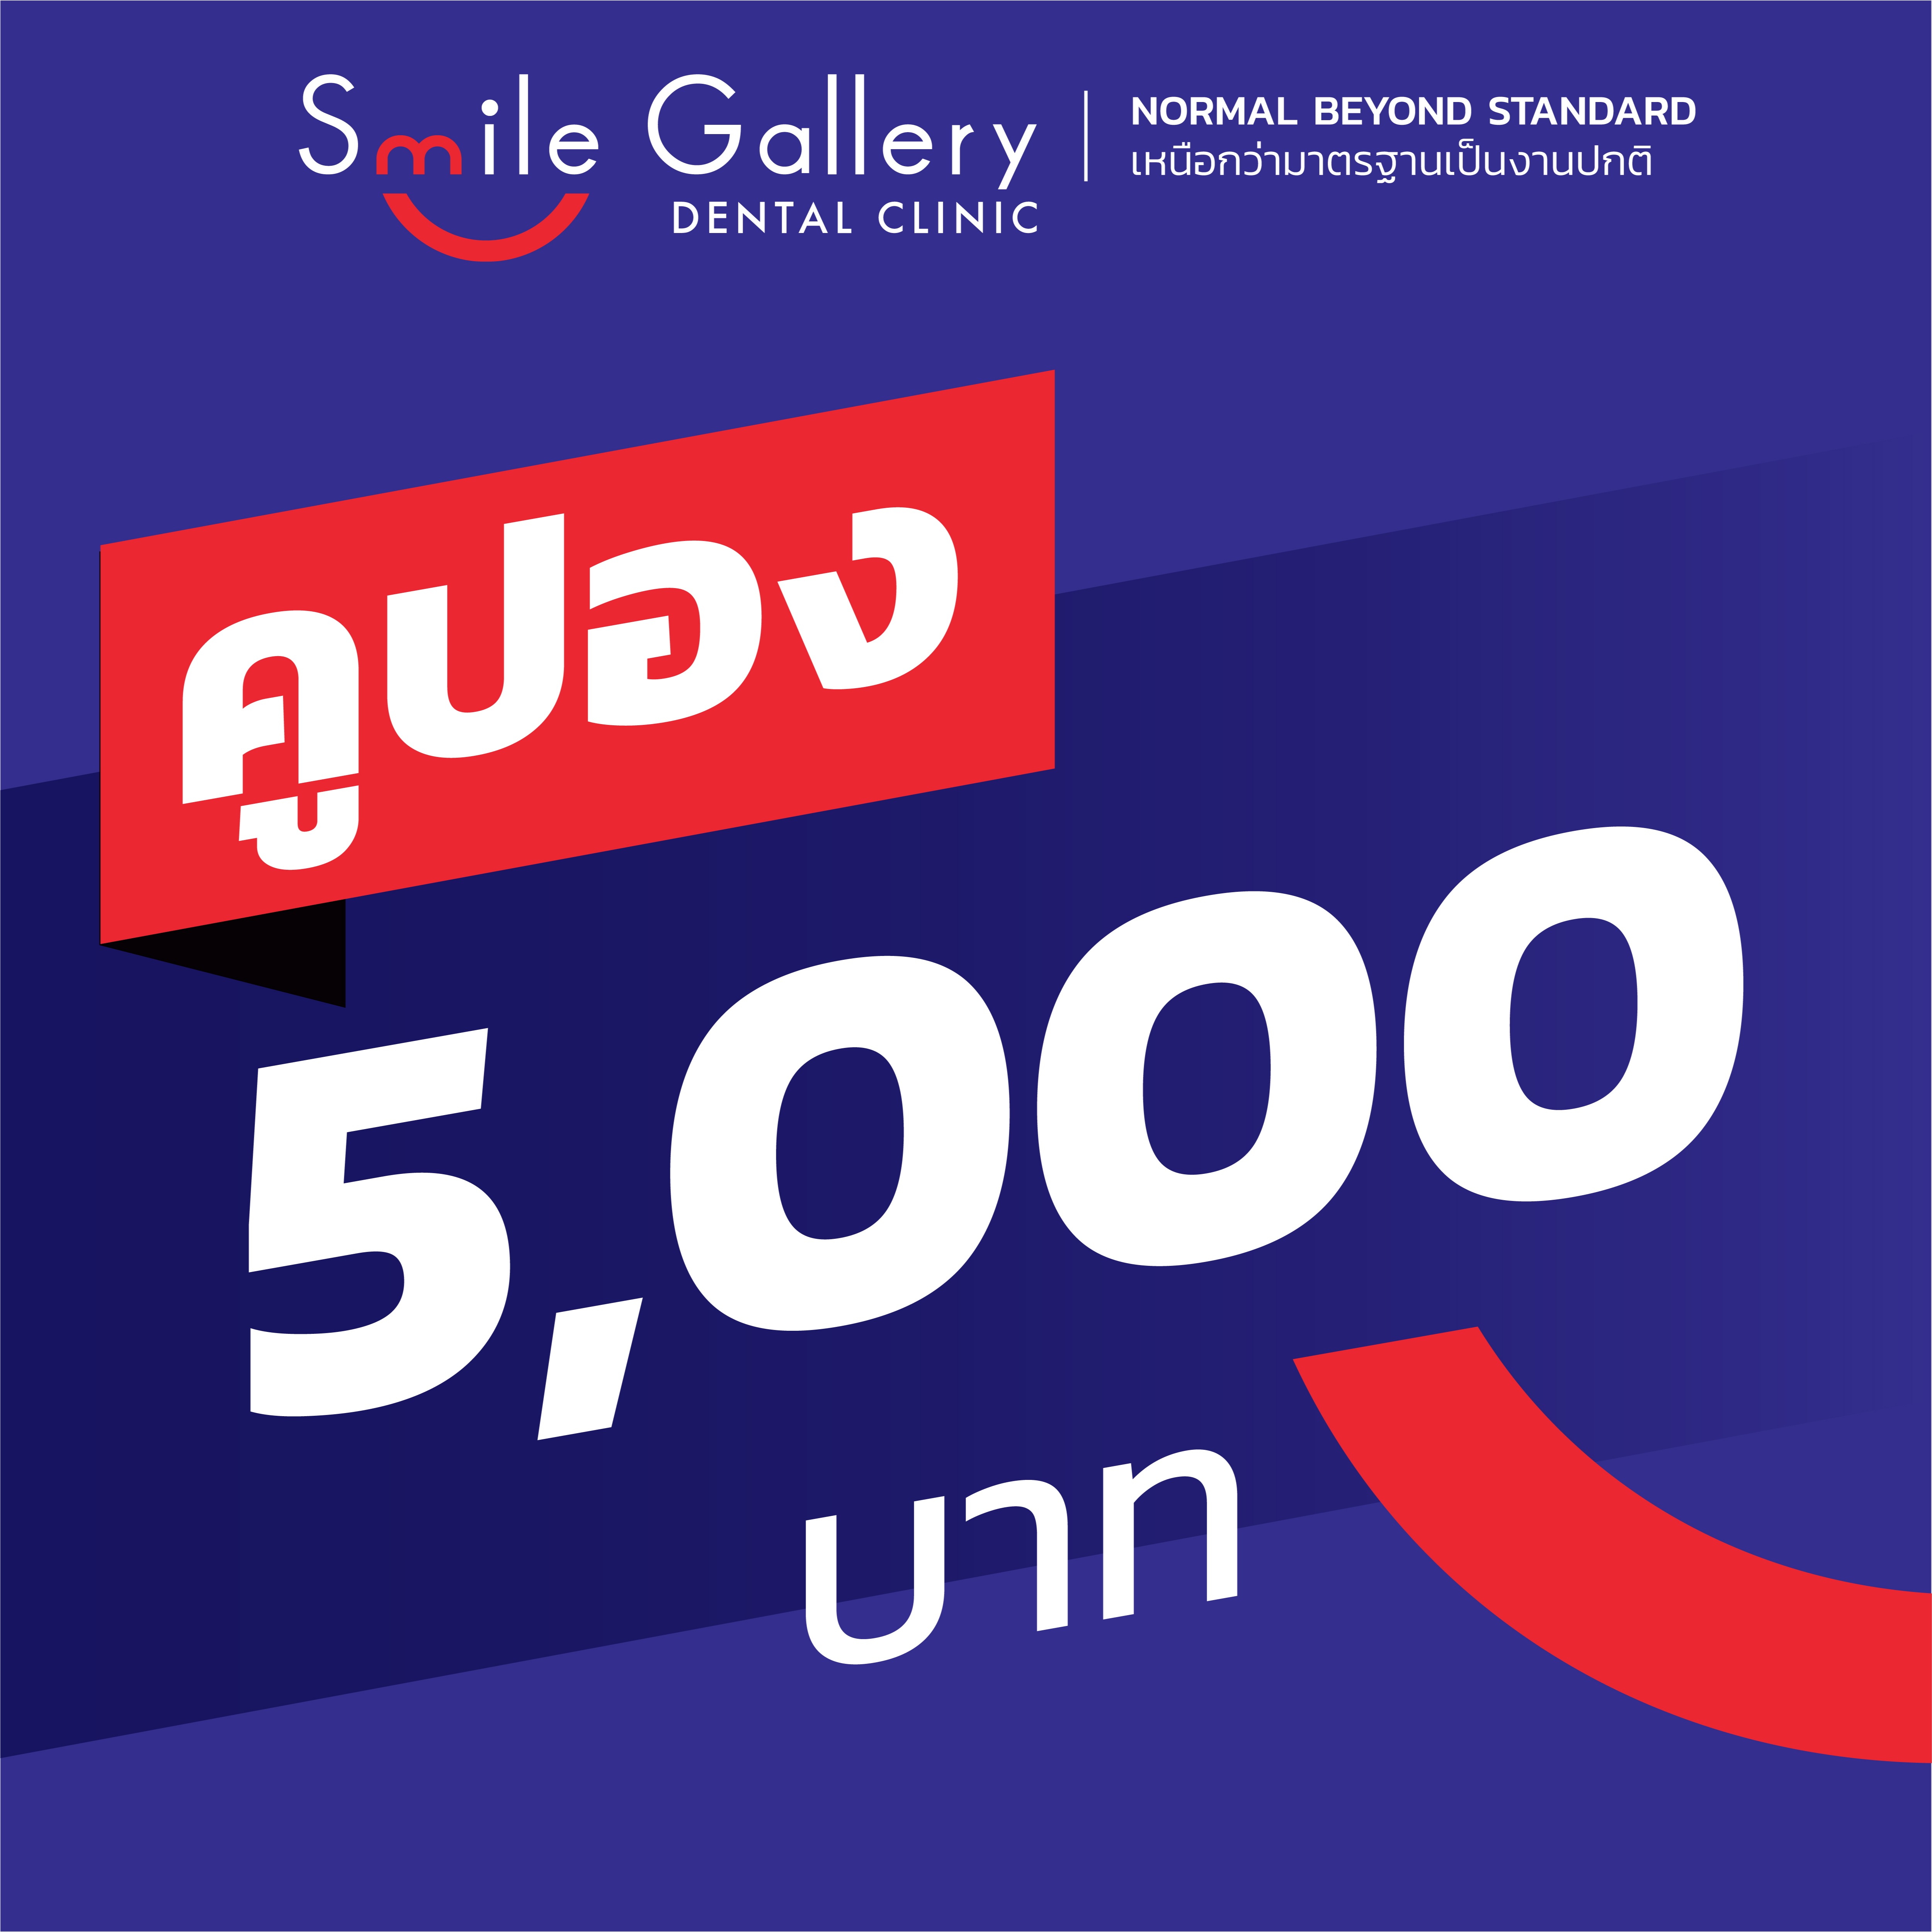 [ E-Voucher ] Smile Gallery - คูปองแทนเงินสดมูลค่า 5,000 บาท : สำหรับใช้เป็นส่วนลดค่าทันตกรรมที่คลินิก